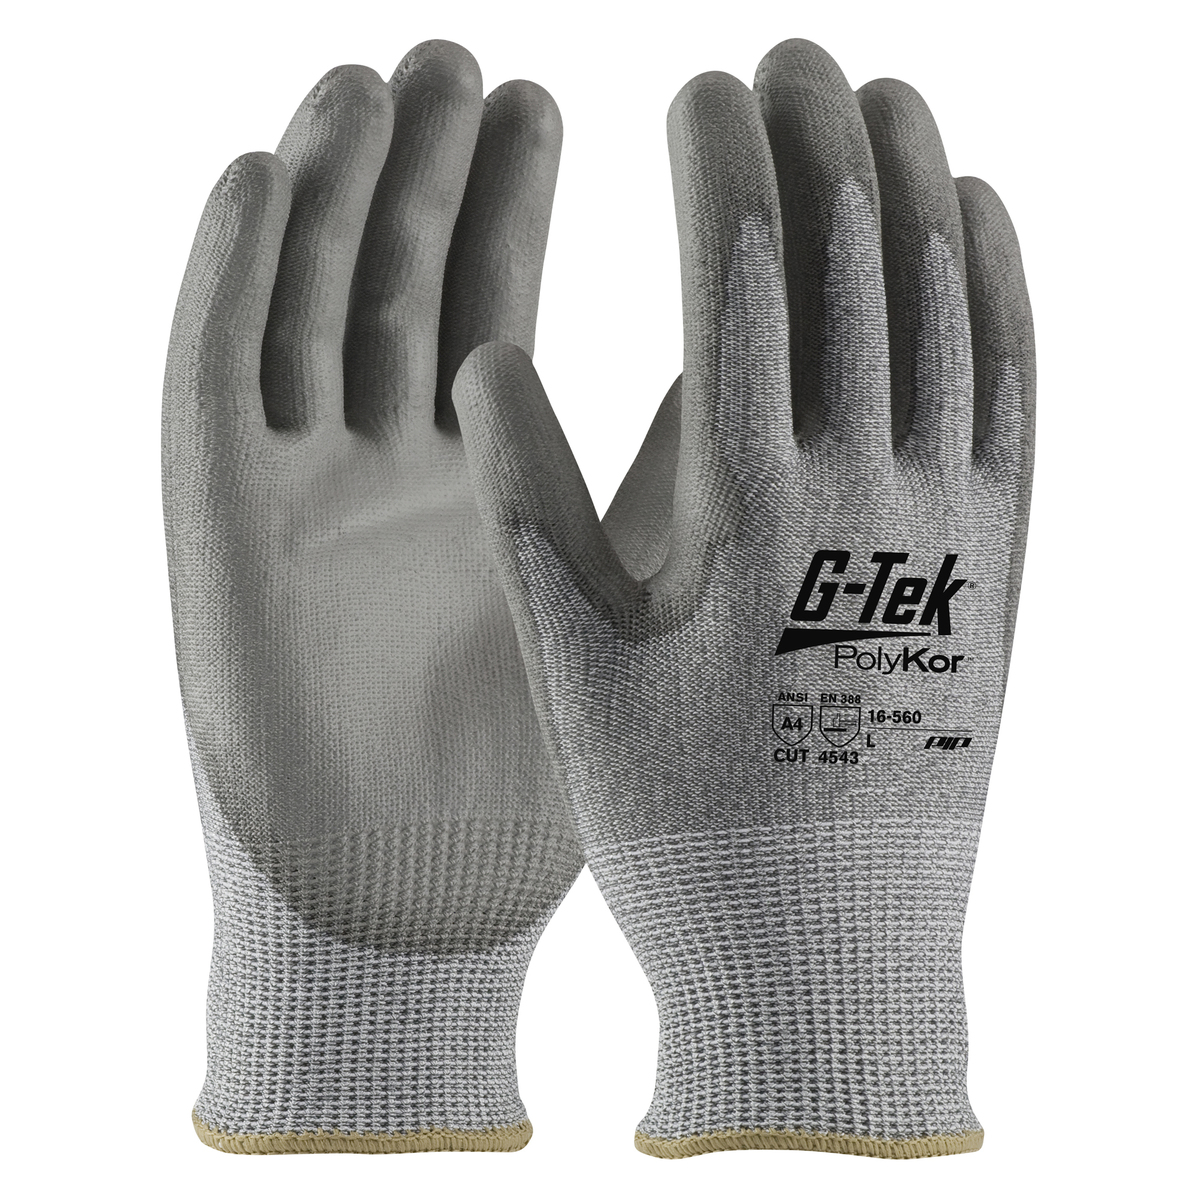 PIP® 2X G-Tek® PolyKor® 13 Gauge PolyKor® Cut Resistant Gloves With Polyurethane Coating